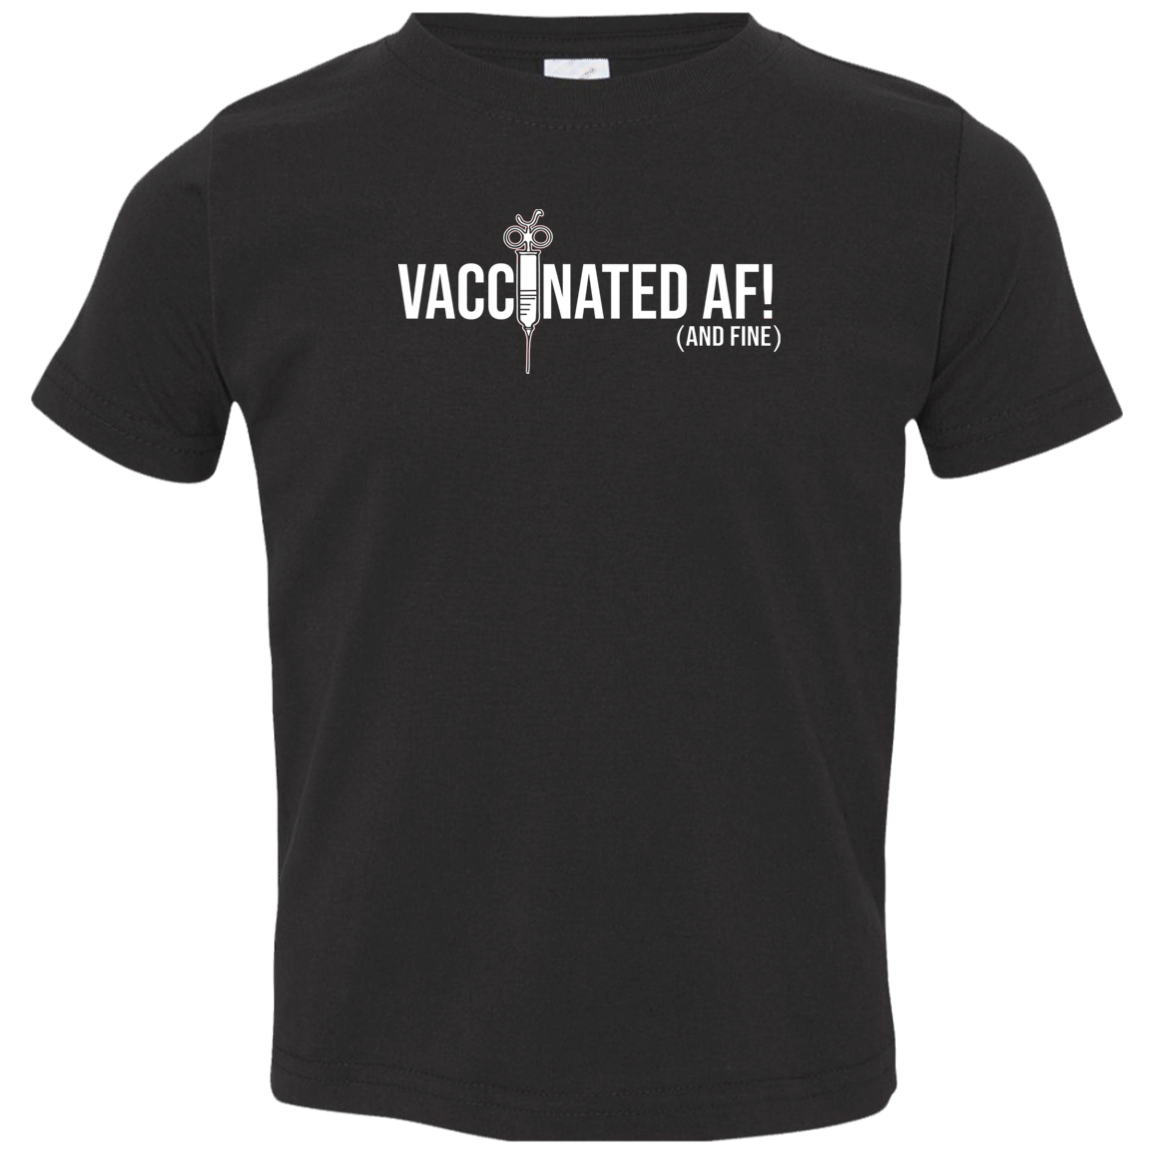 ArtichokeUSA Custom Design. Vaccinated AF (and fine). Toddler Jersey T-Shirt